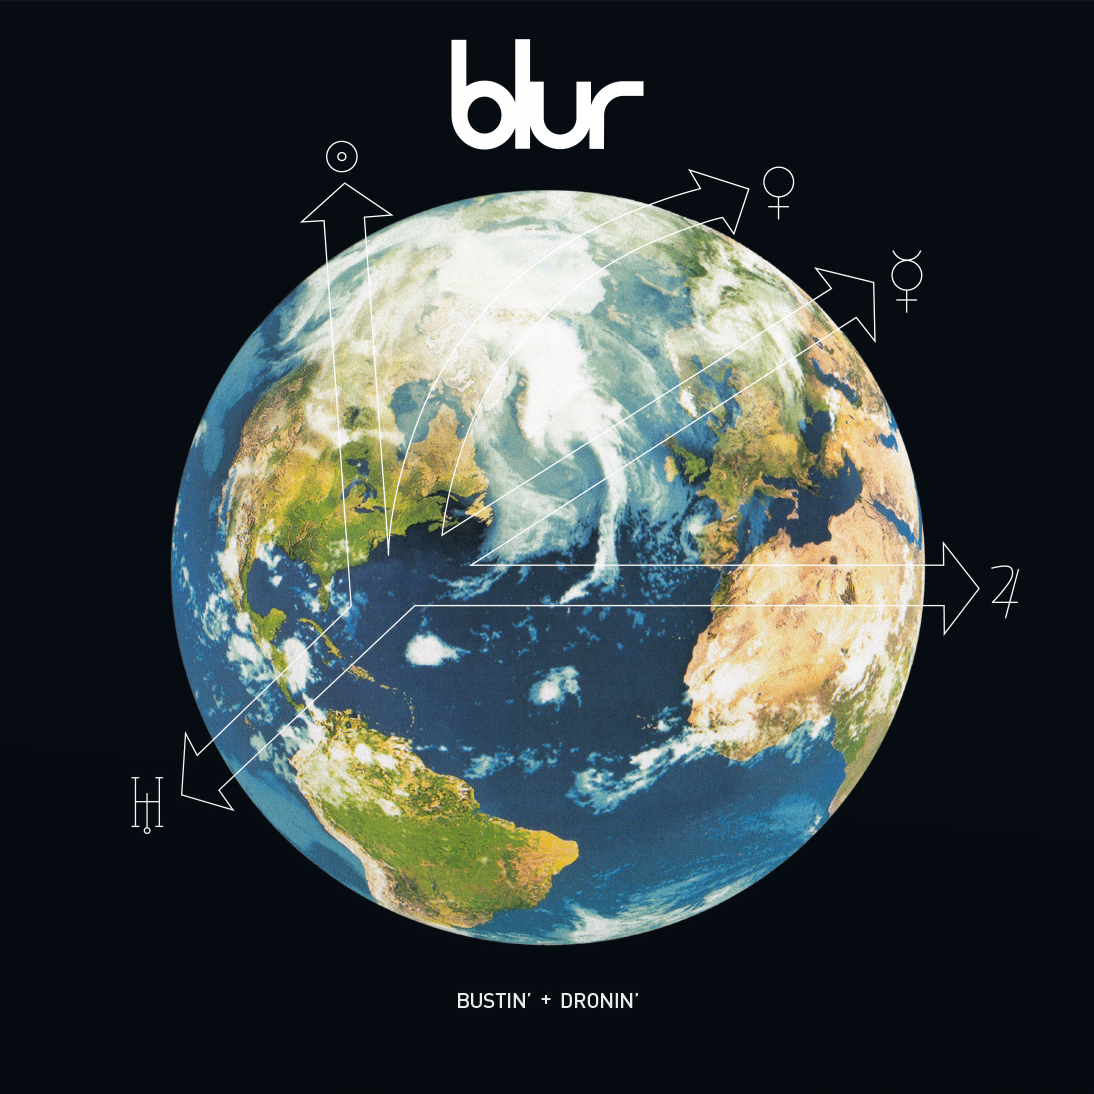 Blur / Bustin' + Dronin' black vinyl and CD reissue